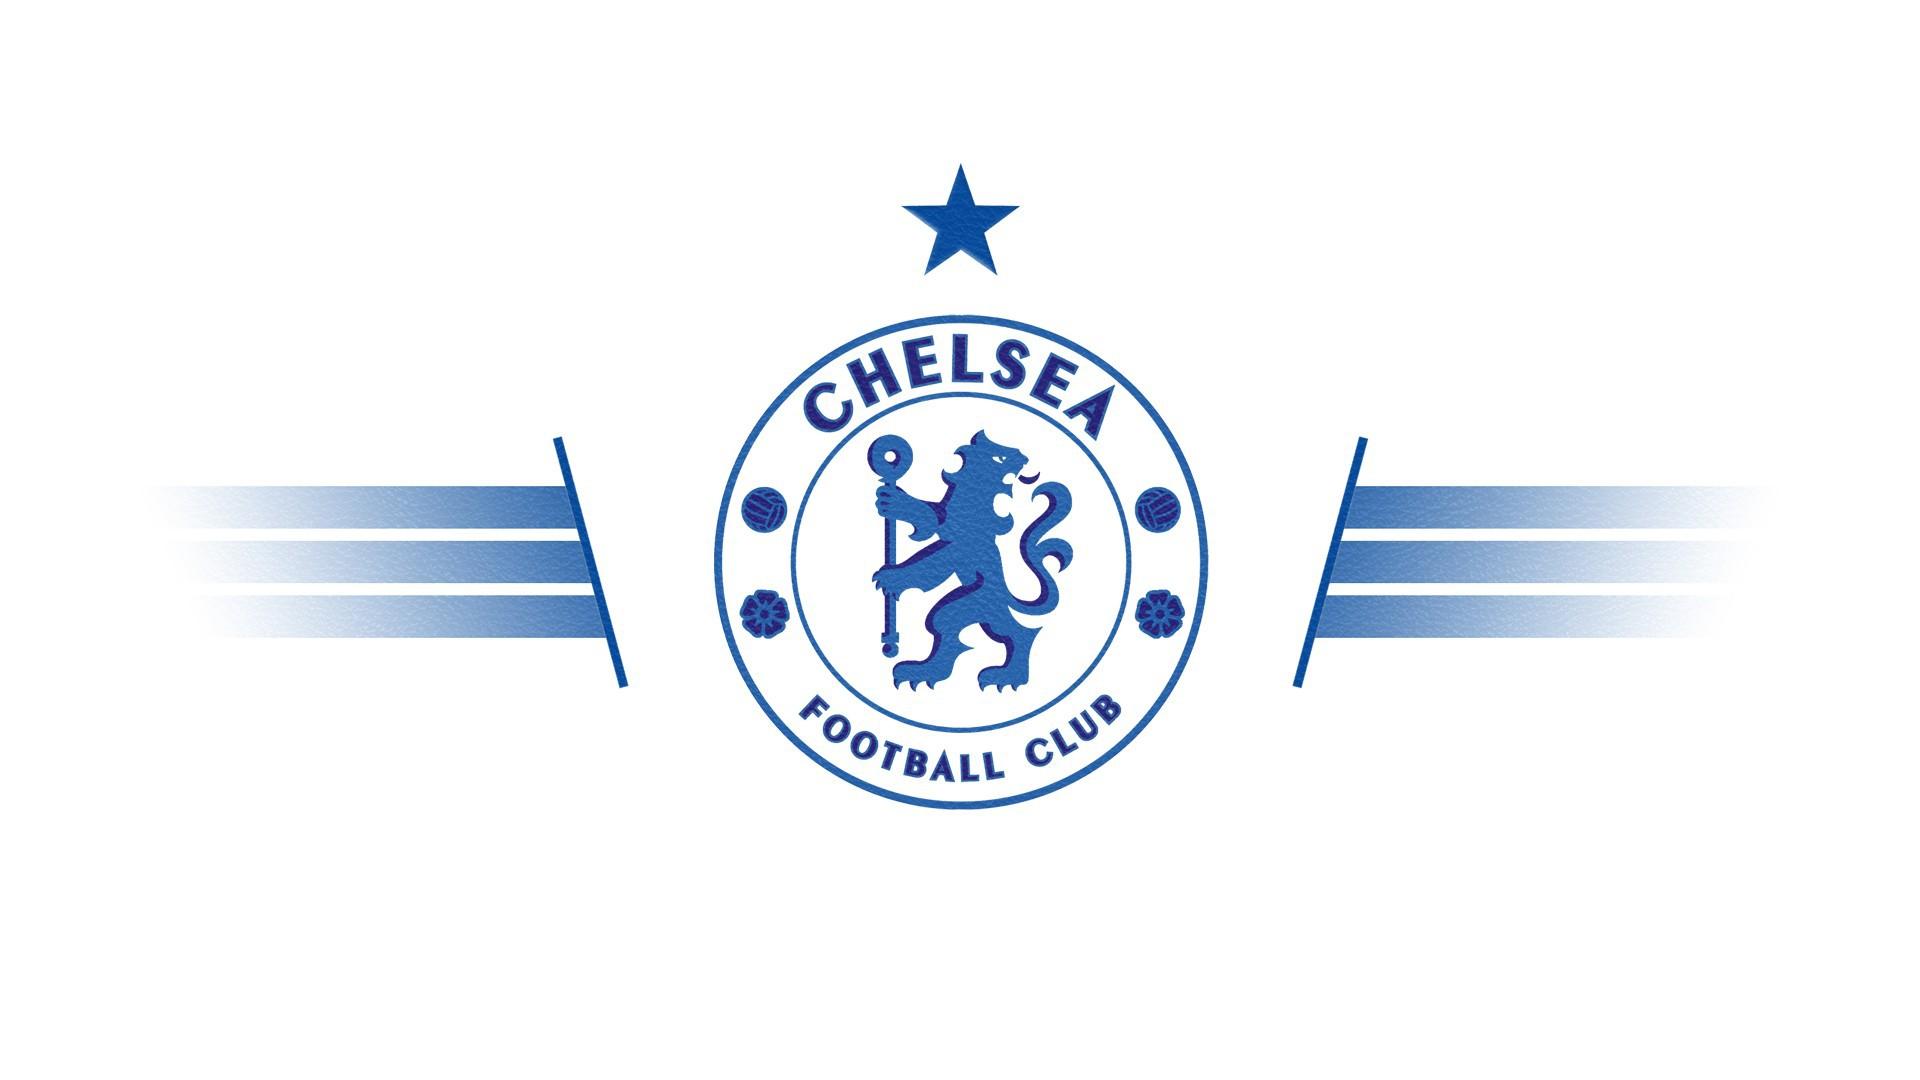 Chelsea Football Club logo blue on white wallpaper